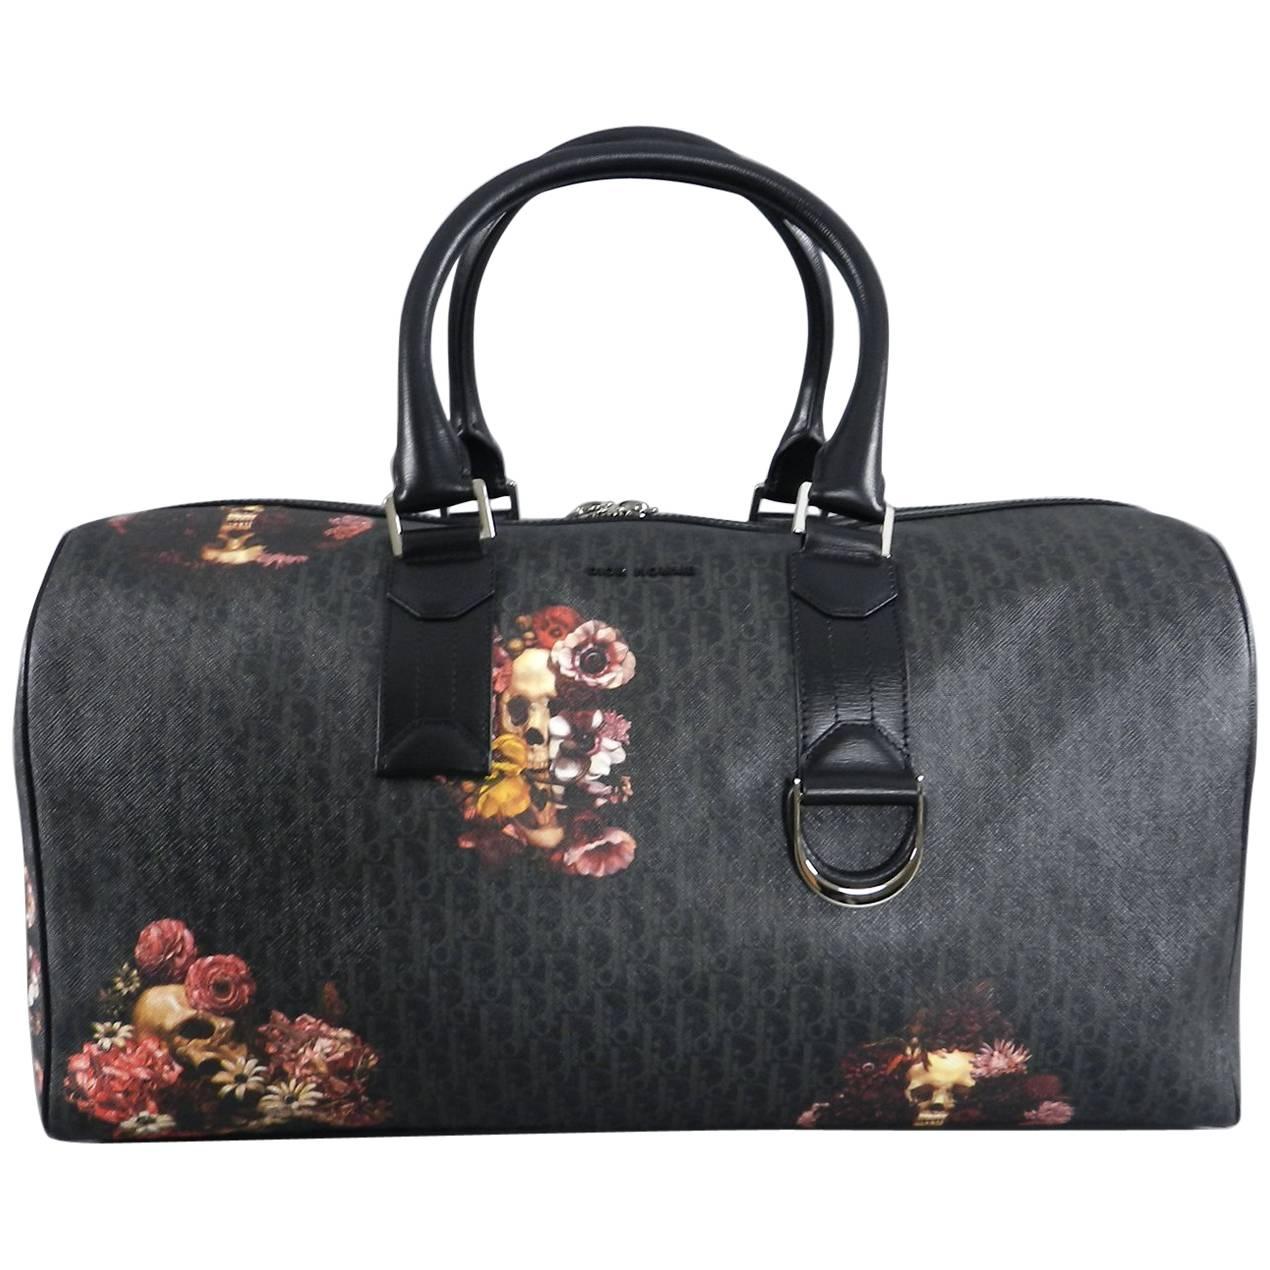 Dior Homme x Toru Kamei SS 2017 Monogram Duffle Travel Bag